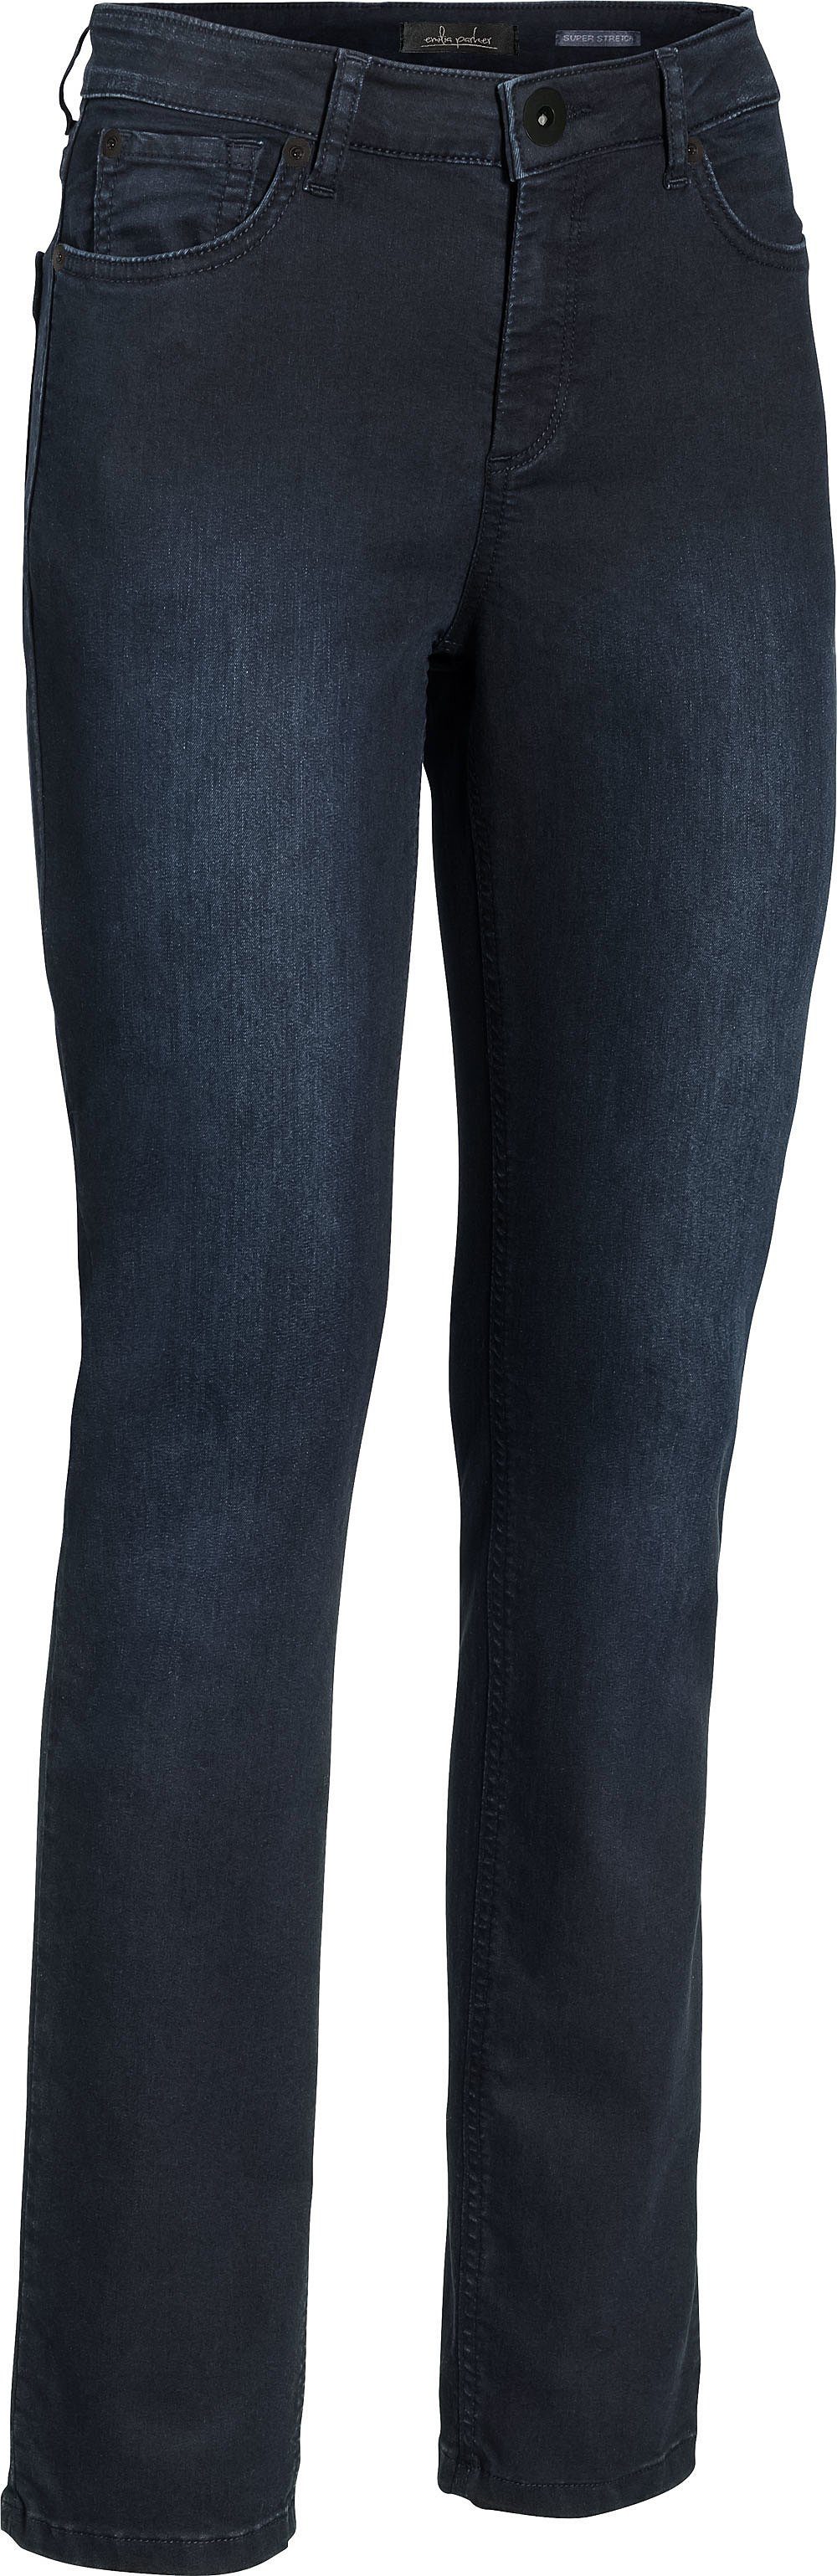 Damen Hosen Emilia Parker Stretch-Hose ultrabequeme Jeans mit knackigem Sitz